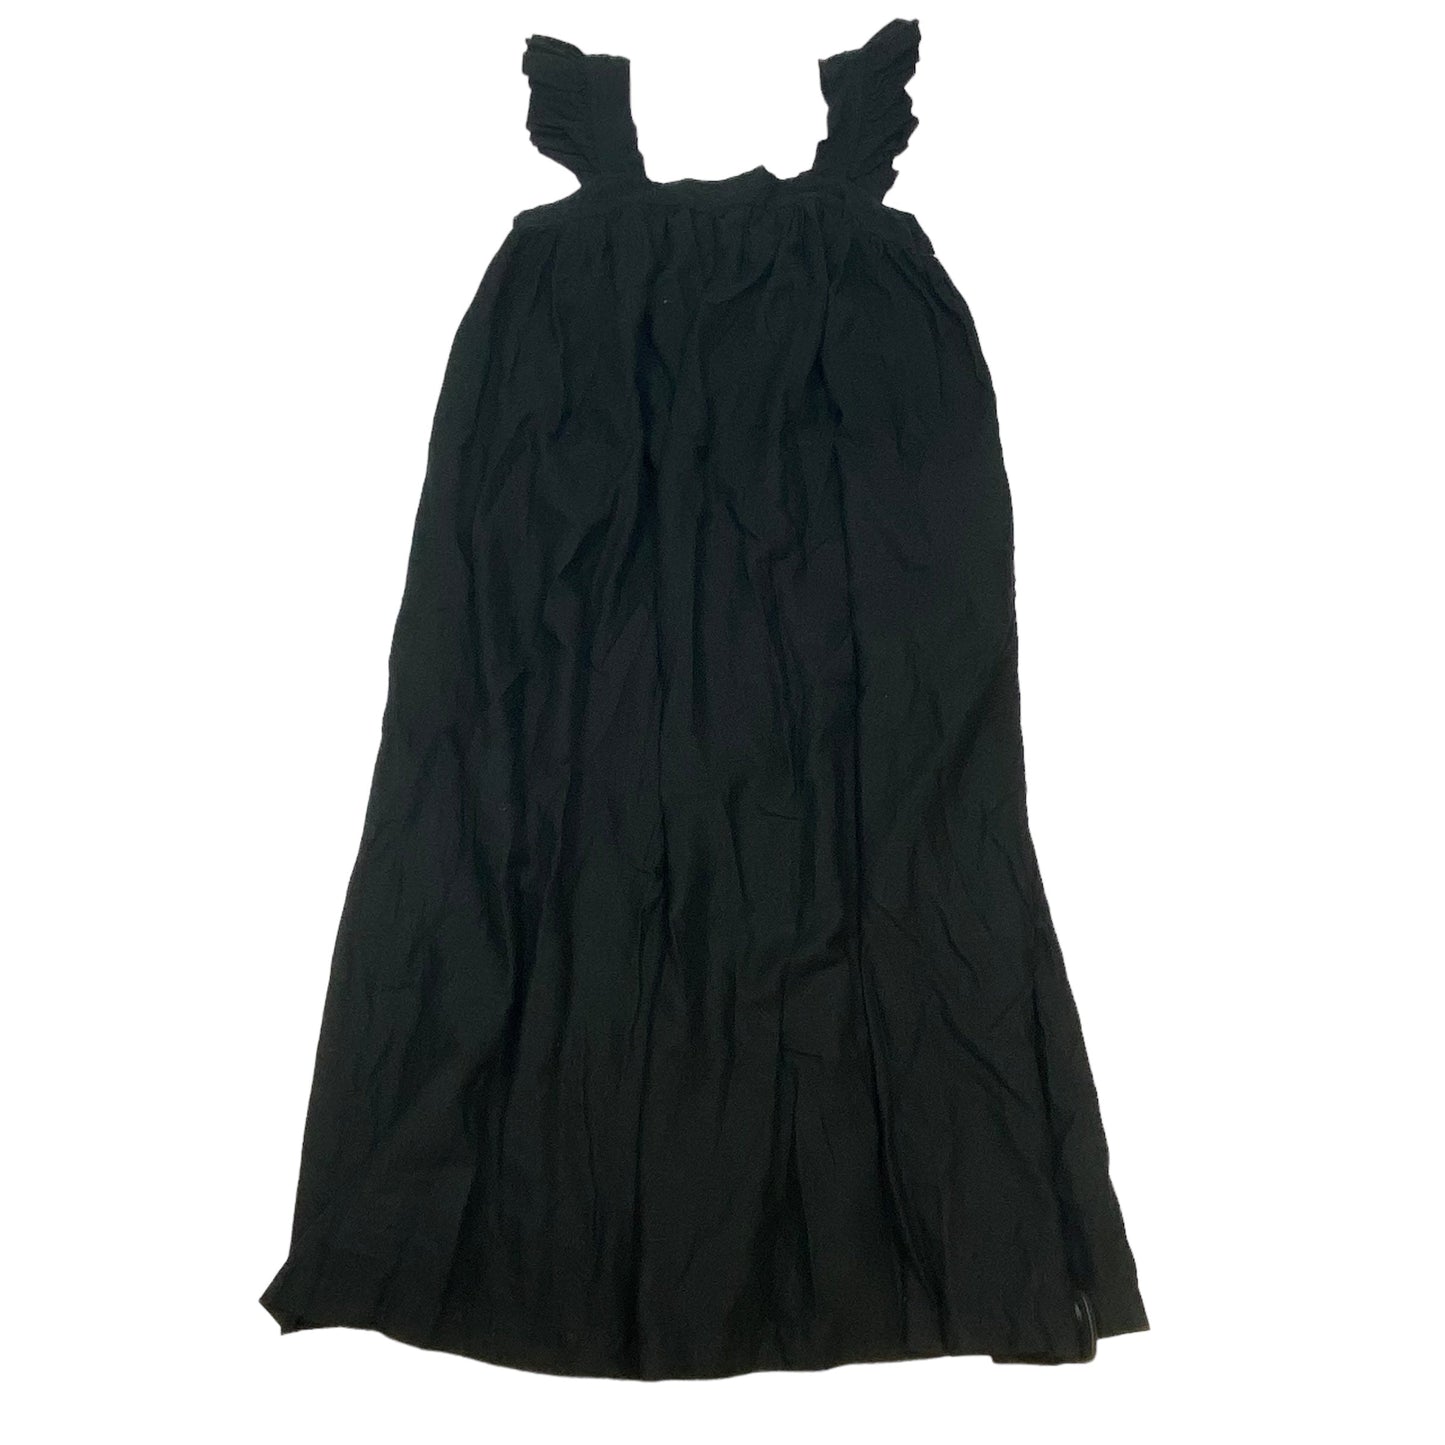 Black Dress Casual Maxi A New Day, Size L